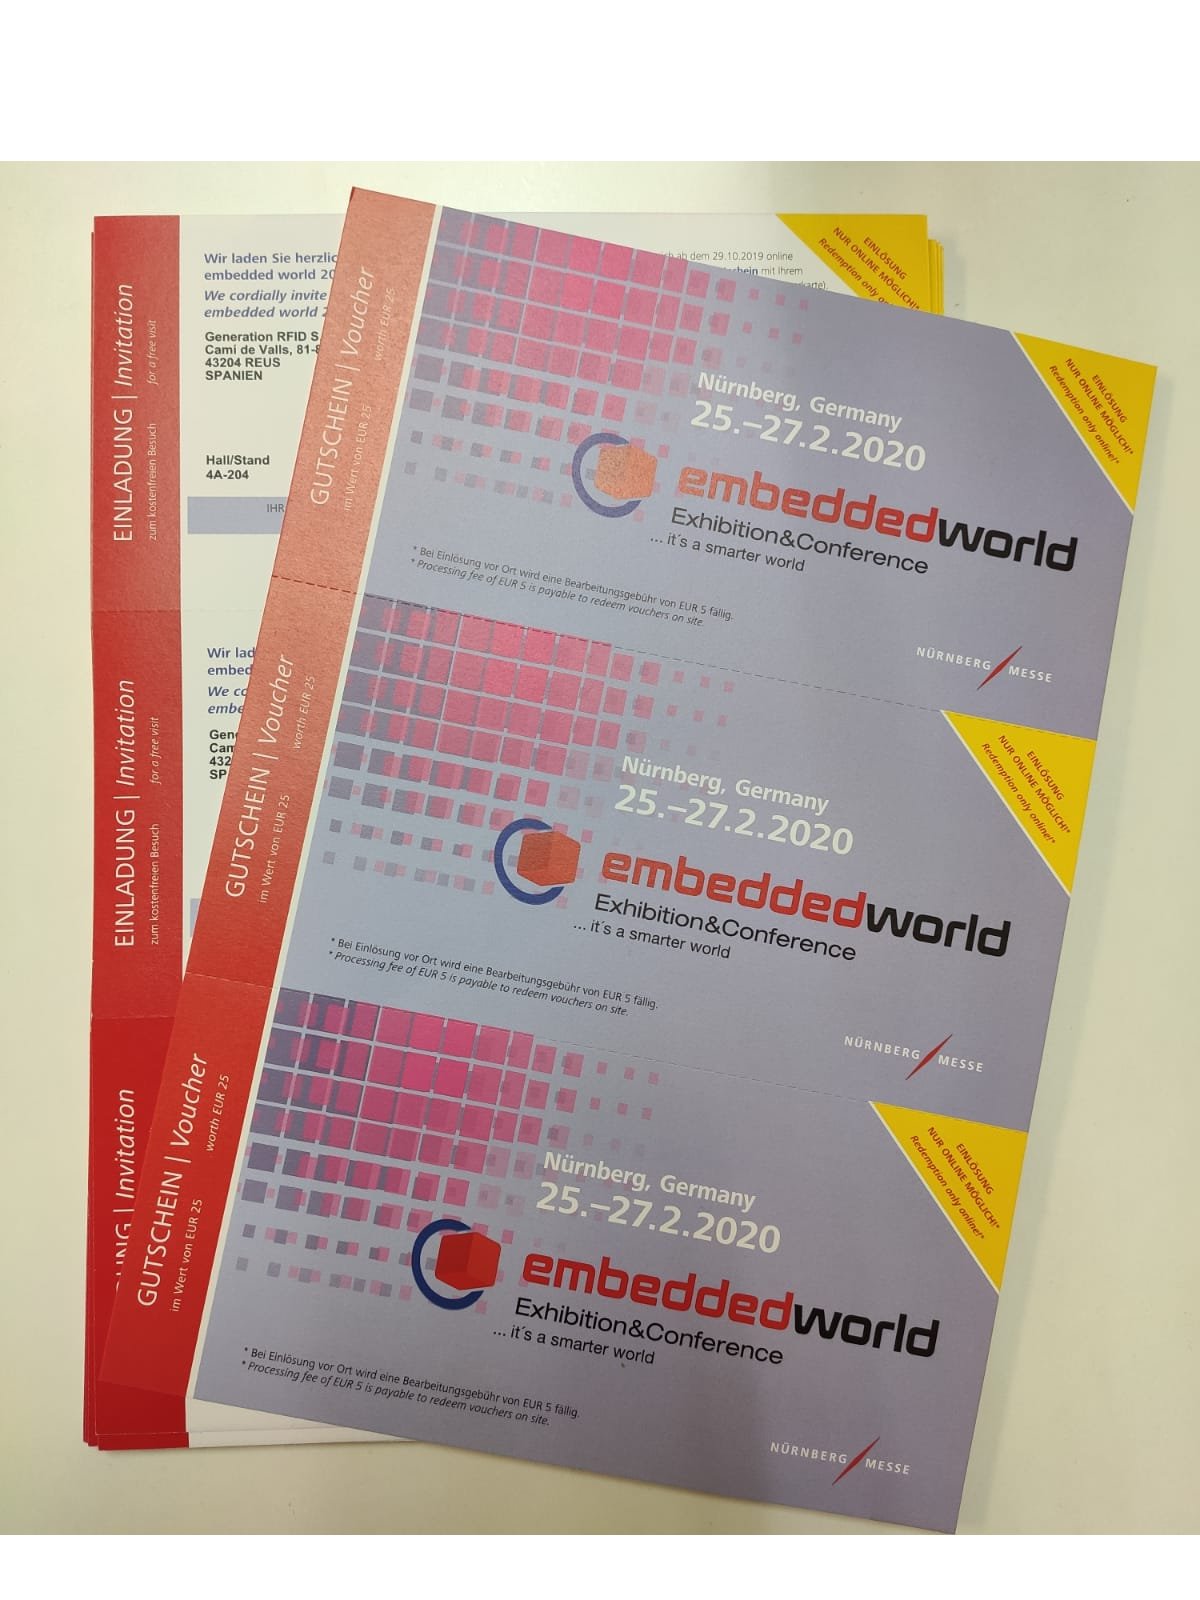 embedded-world-free-tickets-generationrfid